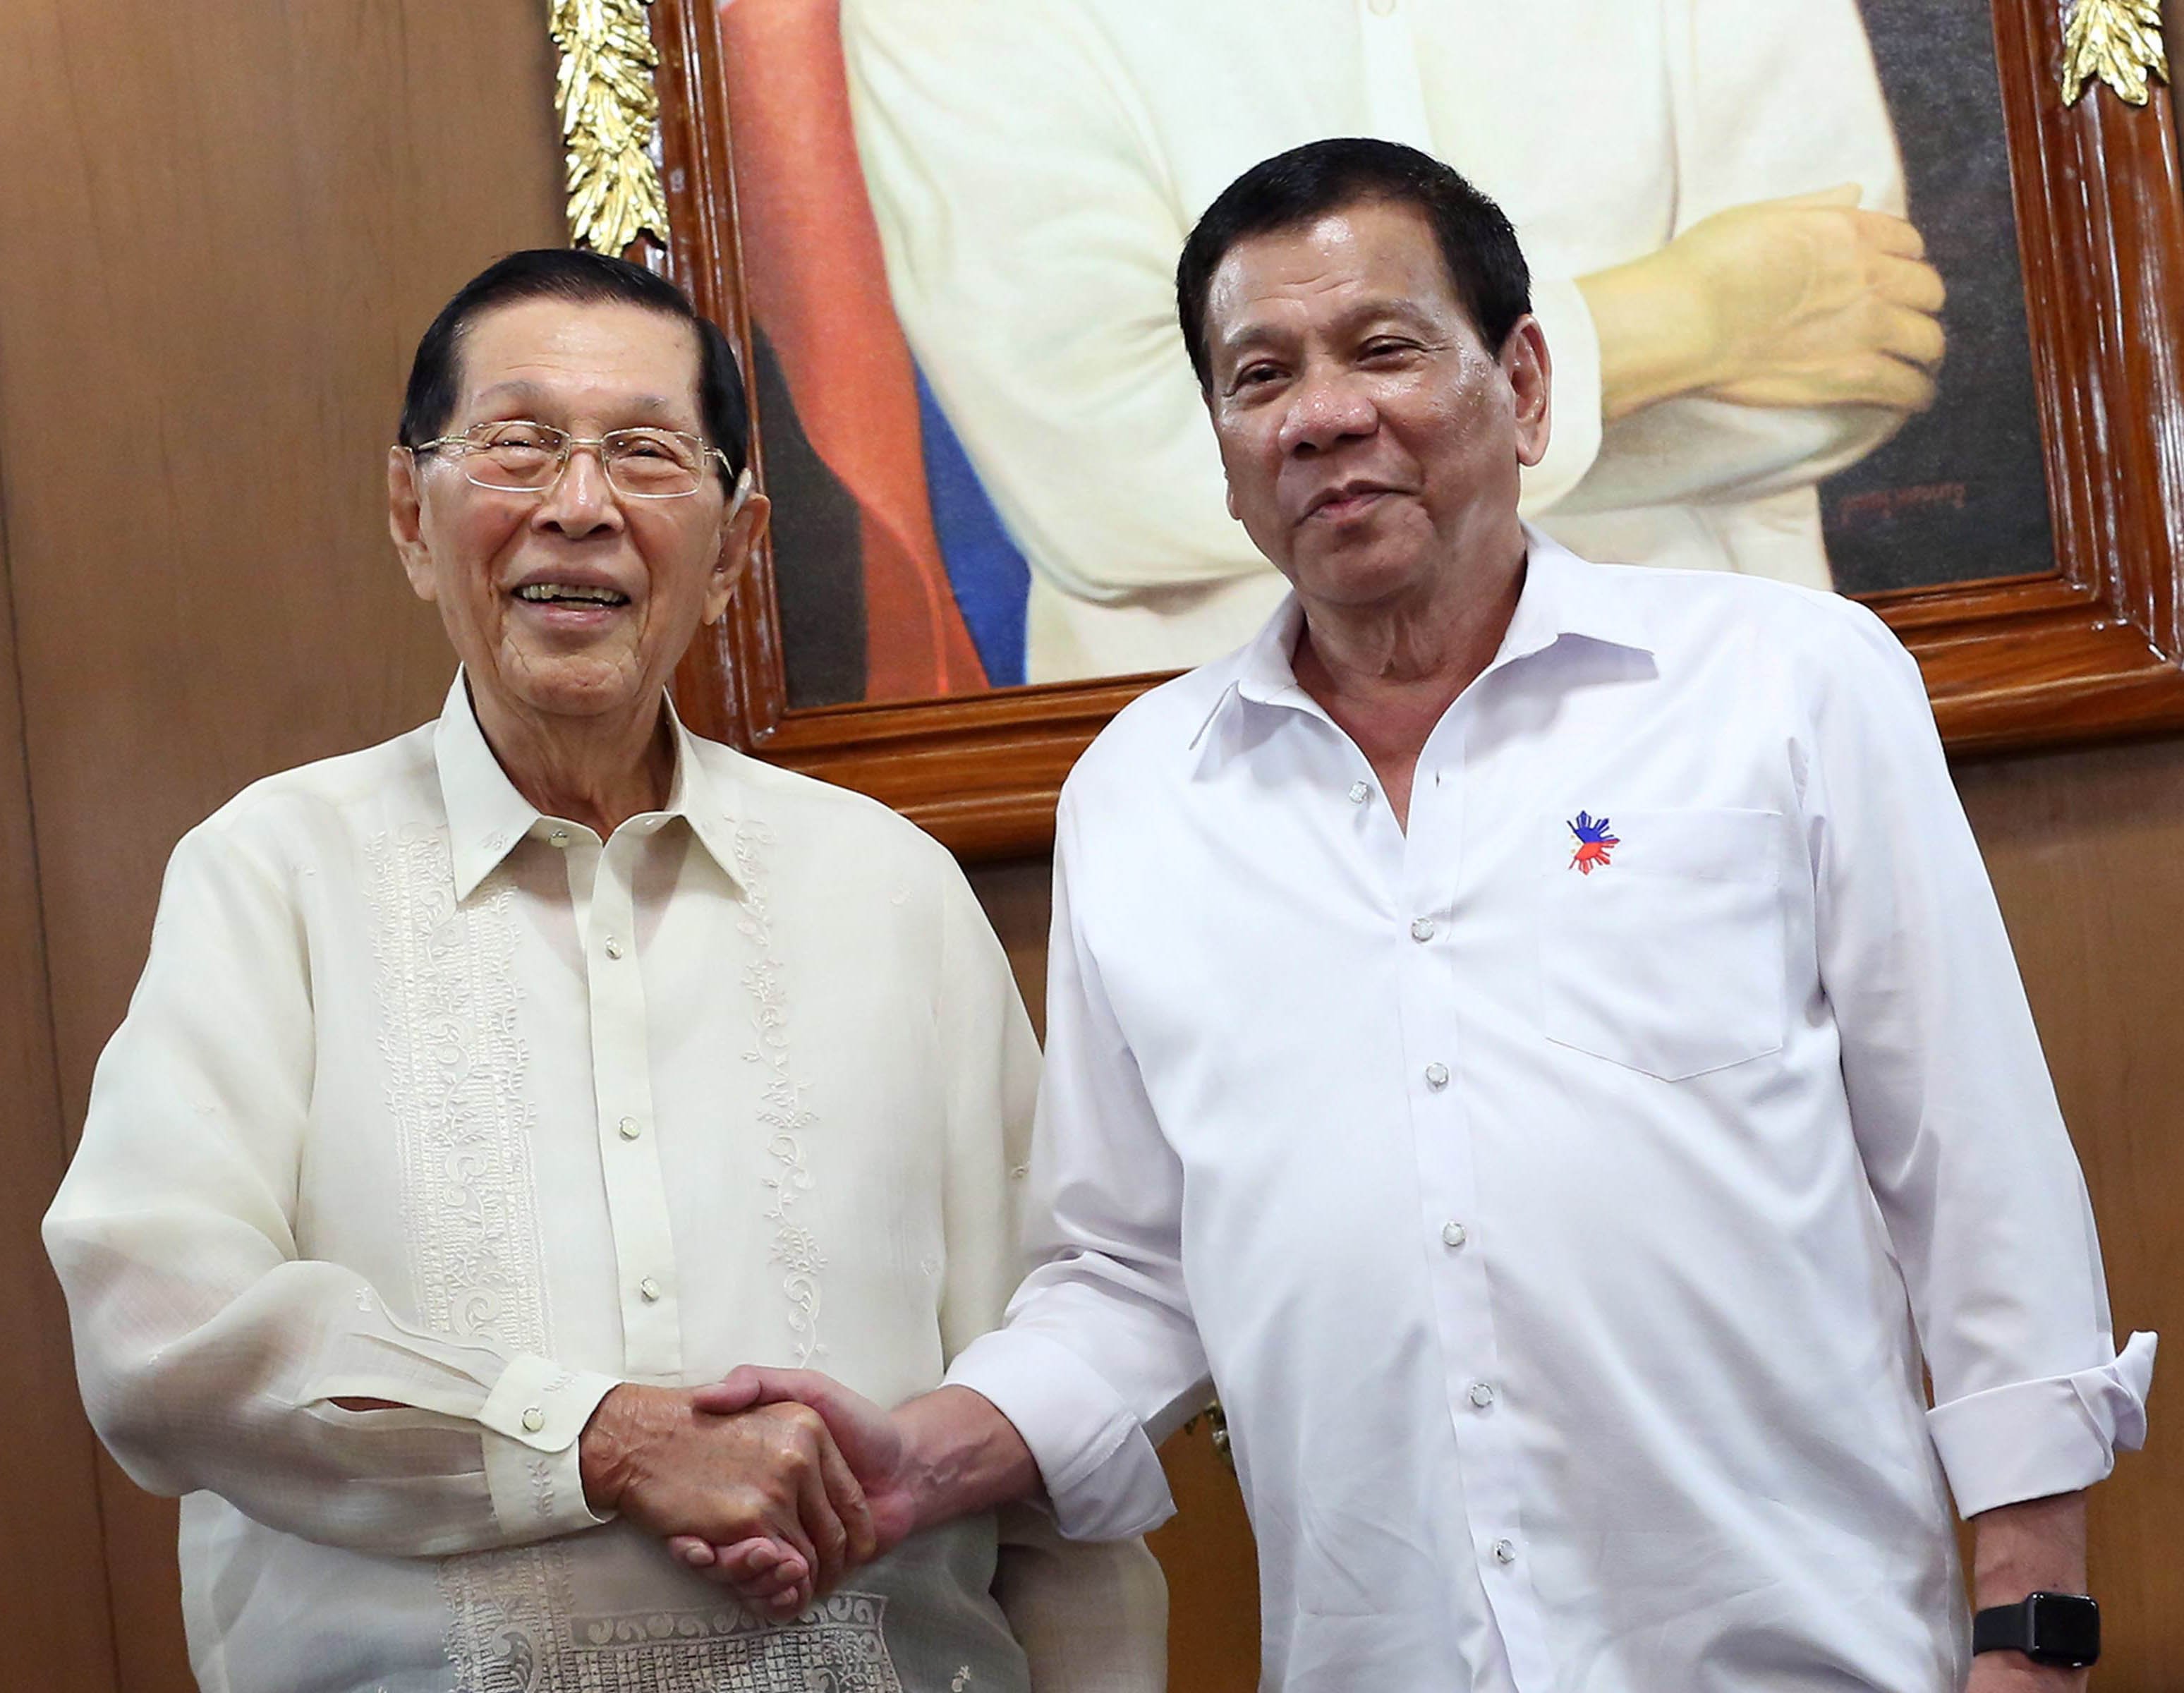 President Duterte shakes hands with Former Senator Juan Ponce Enrile